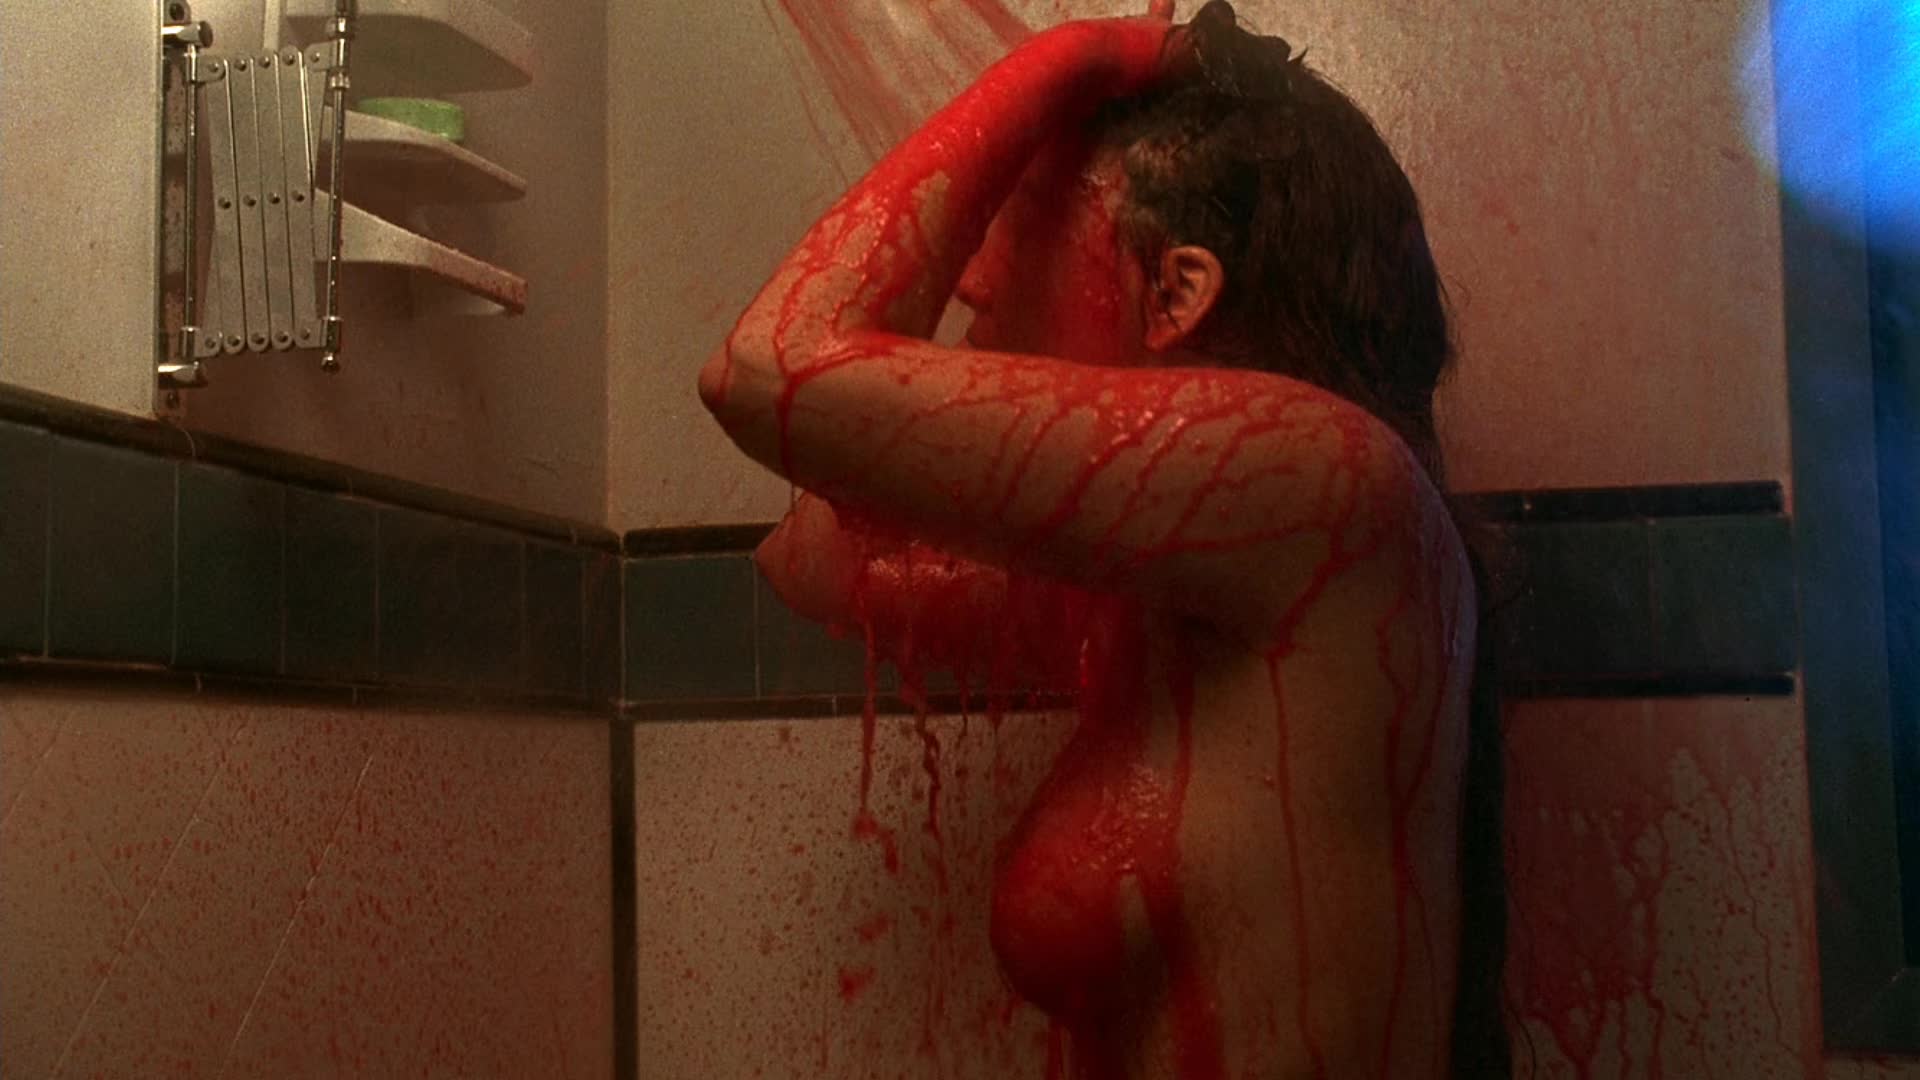 Horror movie nudes: Drew Barrymore - Doppelganger - GIF Video.